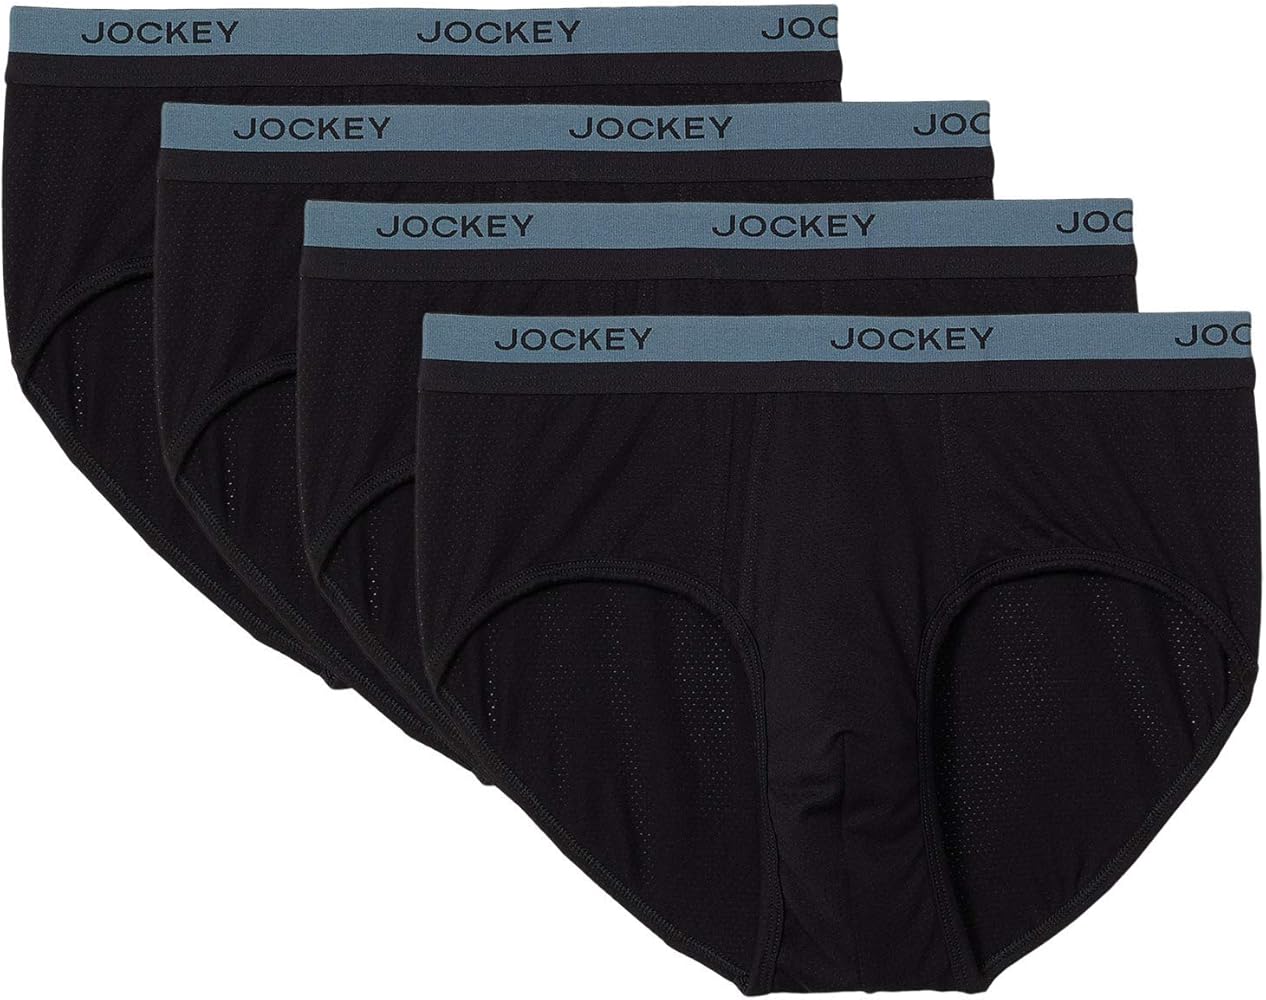 jockey waist